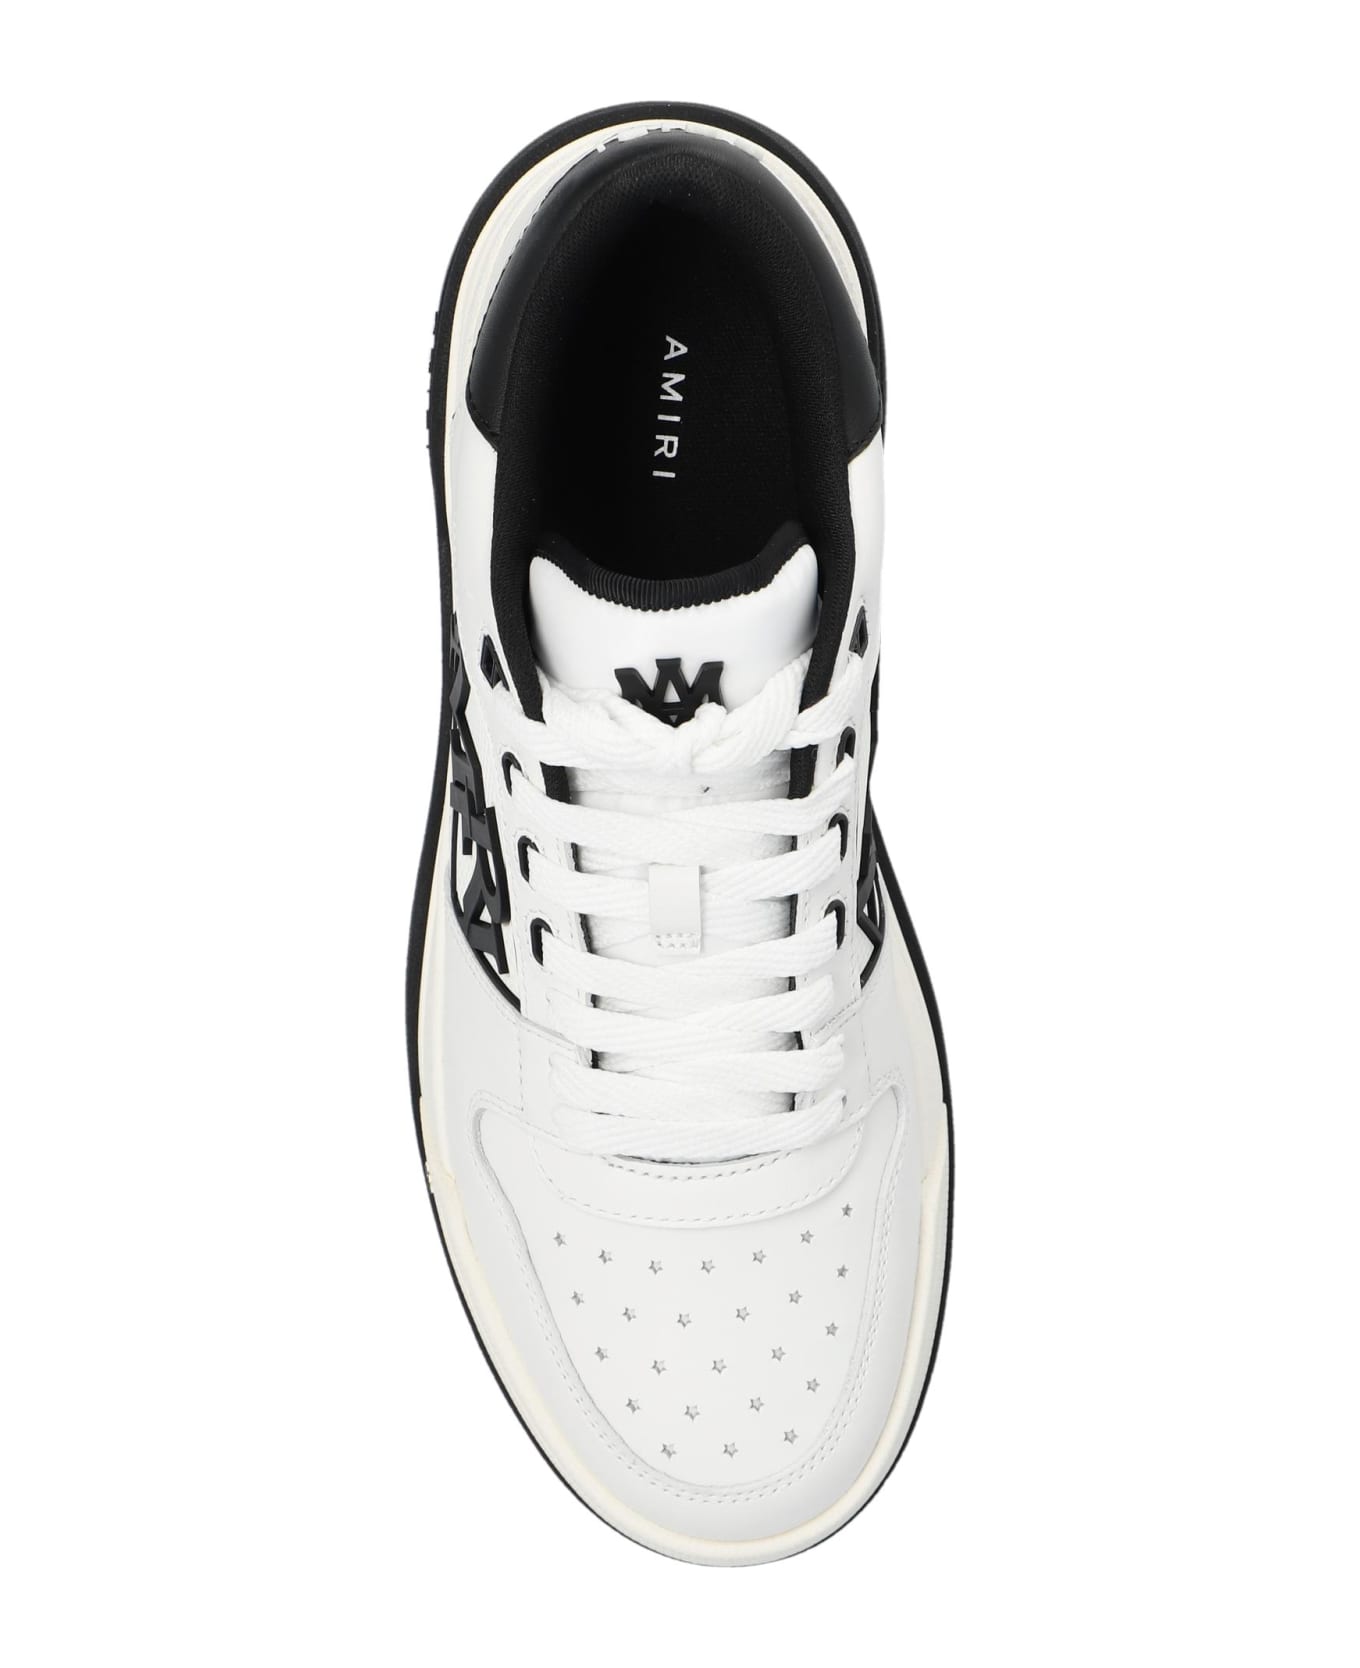 AMIRI 'classic Low Top' Sneakers - Bianco